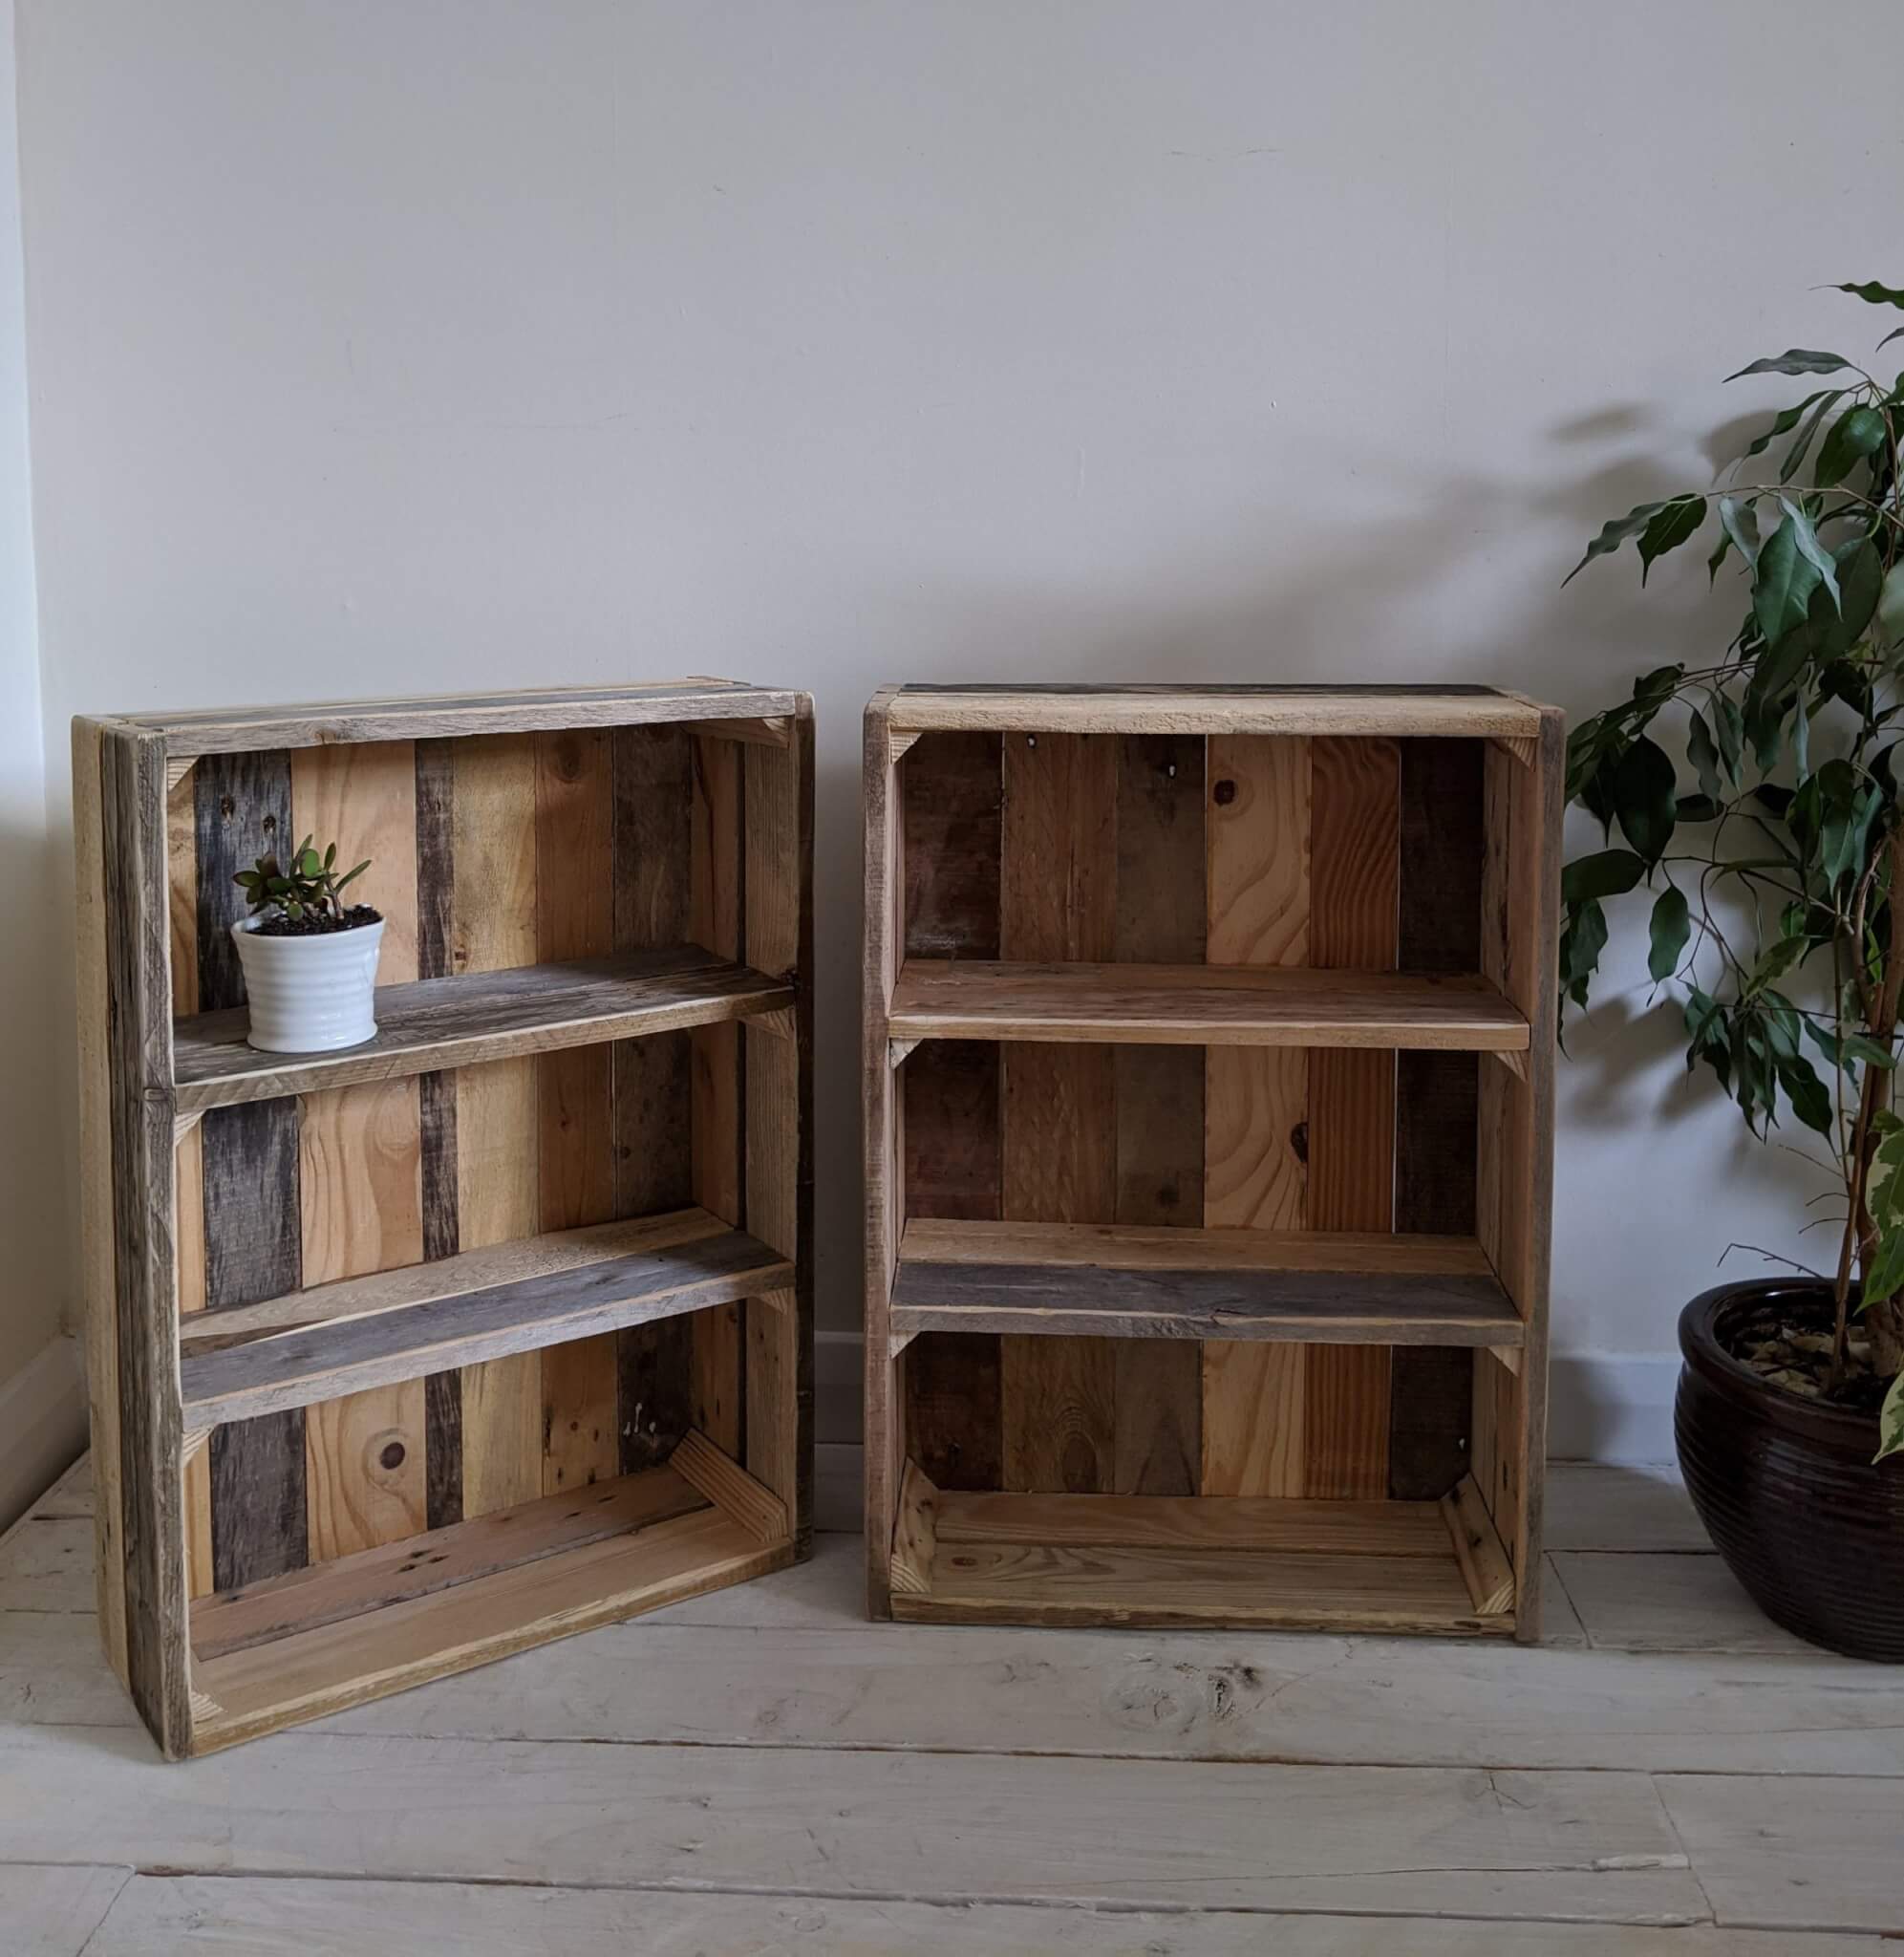 Toscana | Rustic Wooden Storage Unit | Reclaimed Wood • ecomersh.